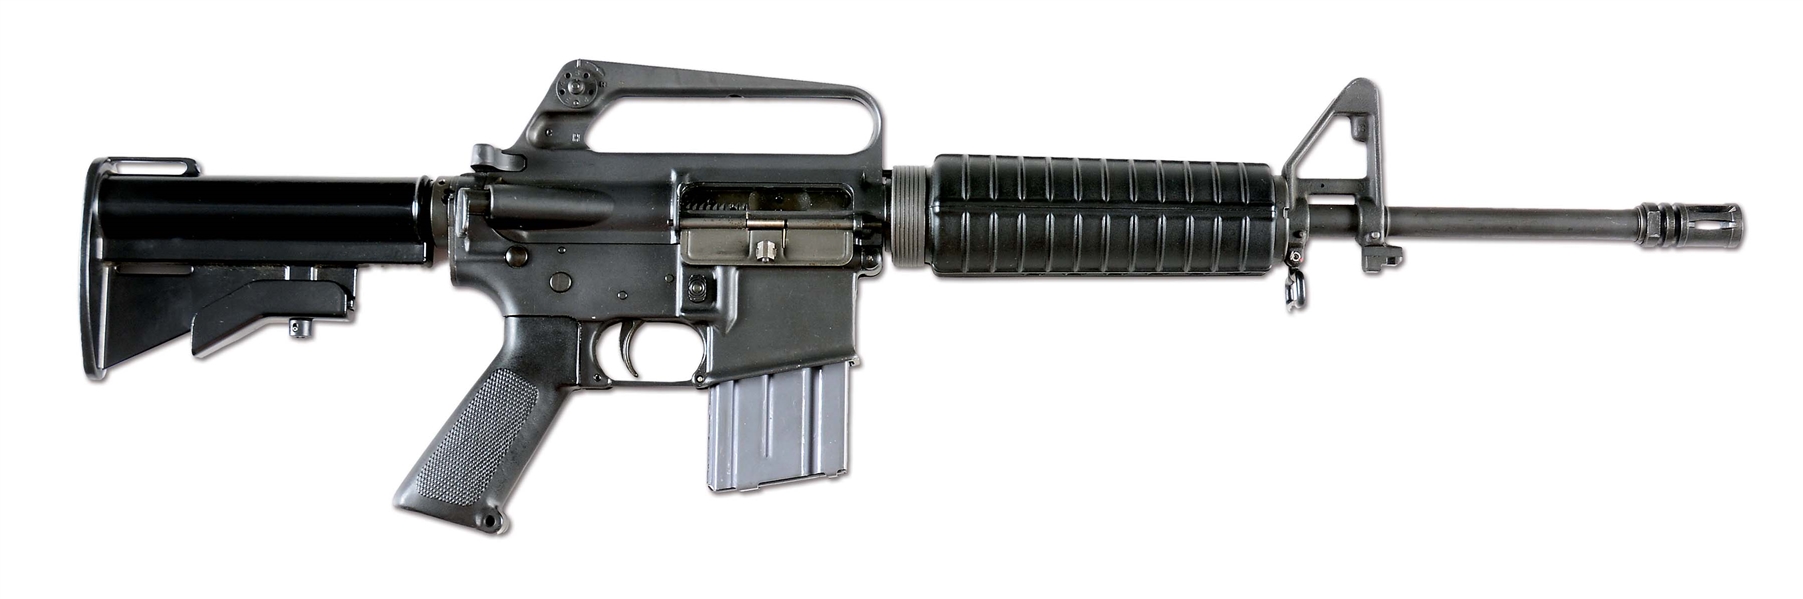 (N) COLT M16A1 CARBINE MACHINE GUN (FULLY TRANSFERABLE).